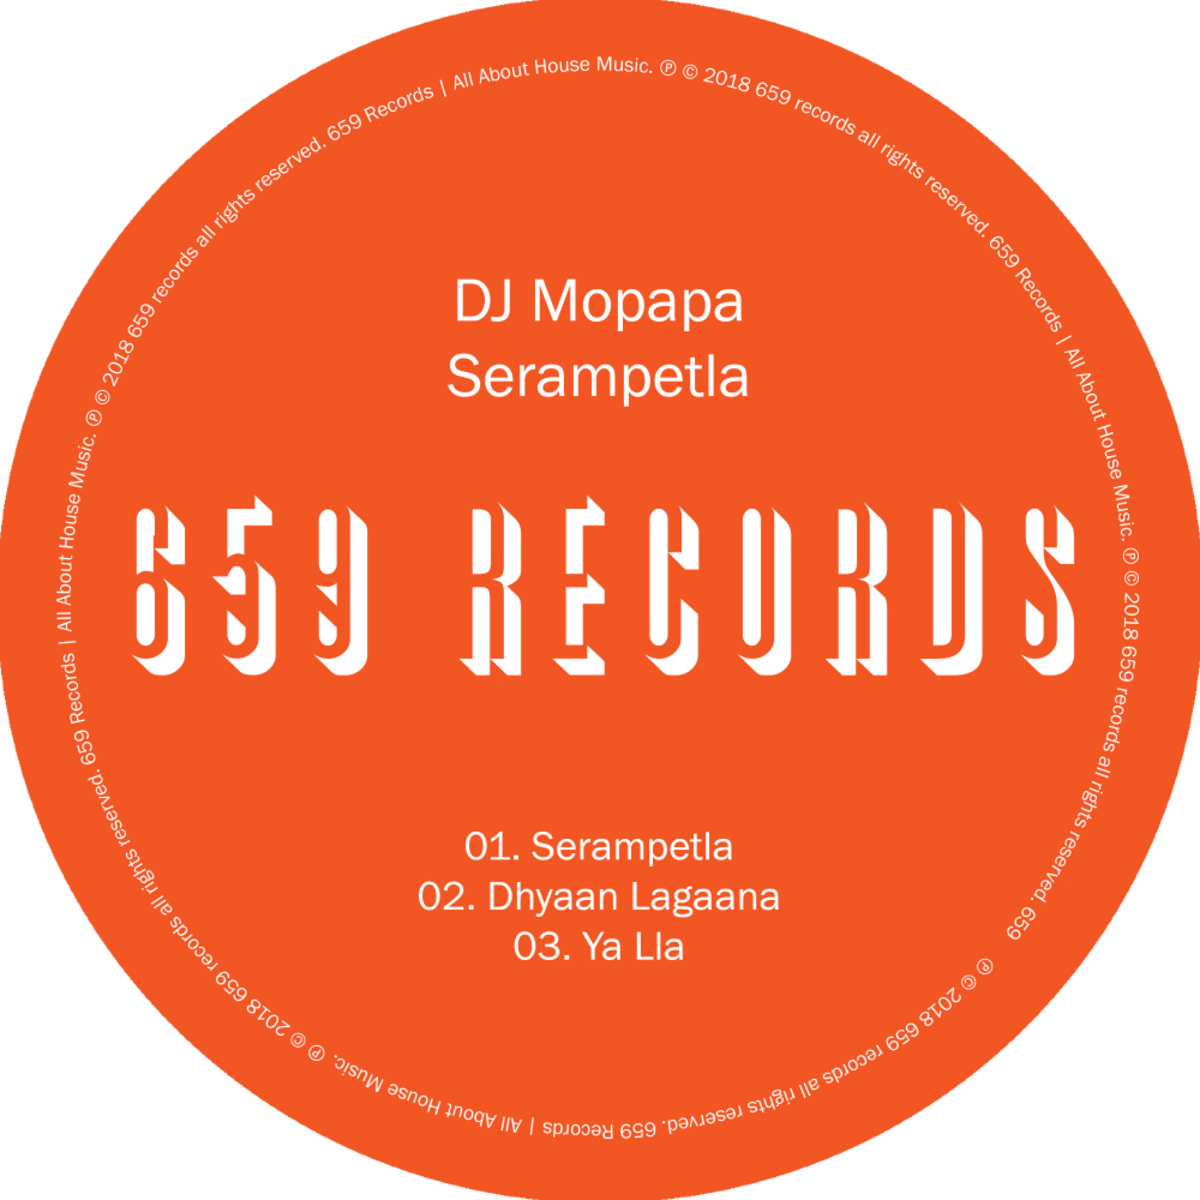 DJ Mopapa - Serampetla / 659 Records